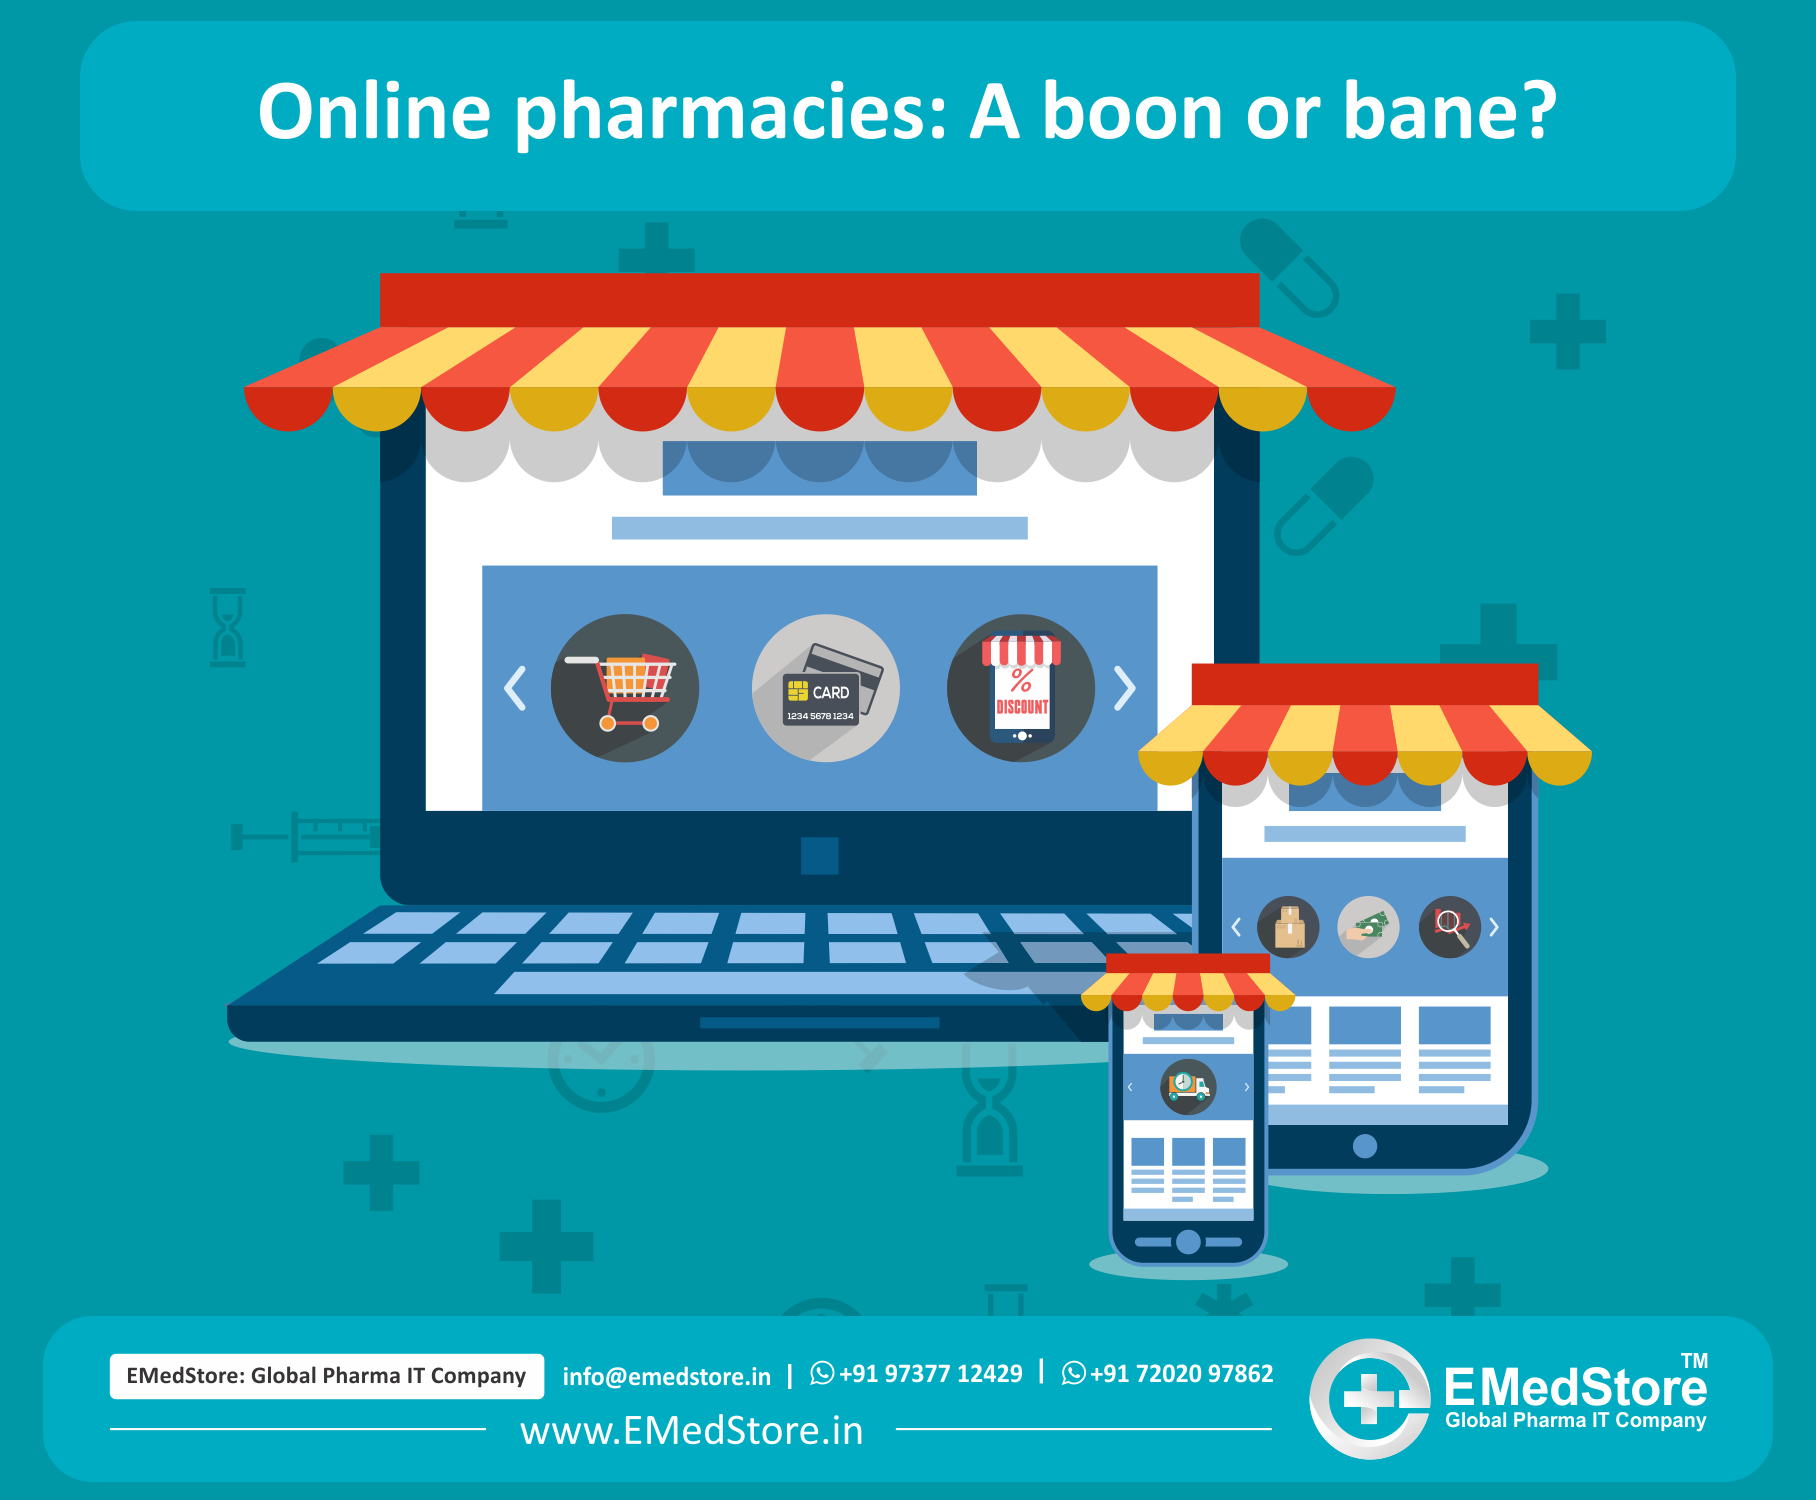 Online pharmacies: A boon or bane?